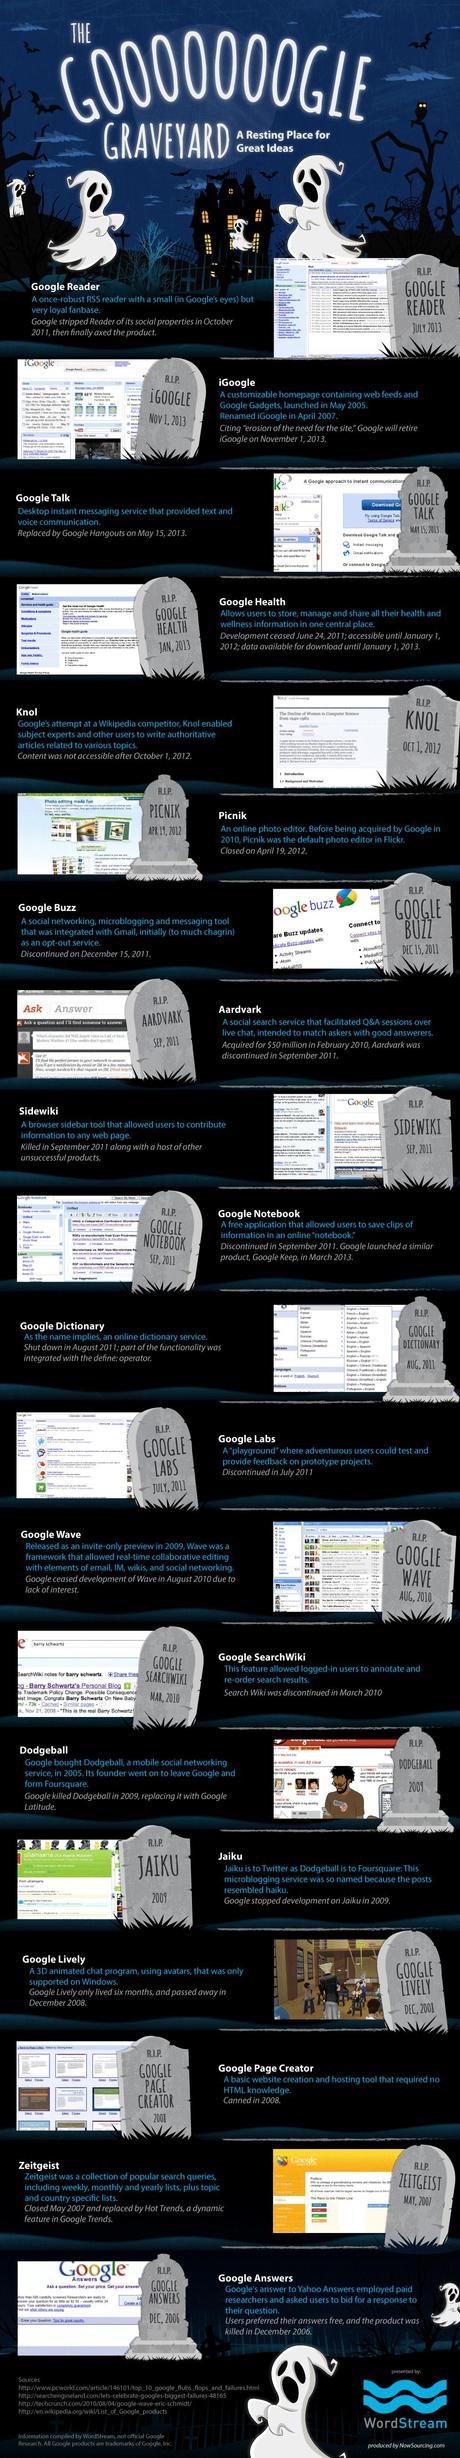 google-graveyard